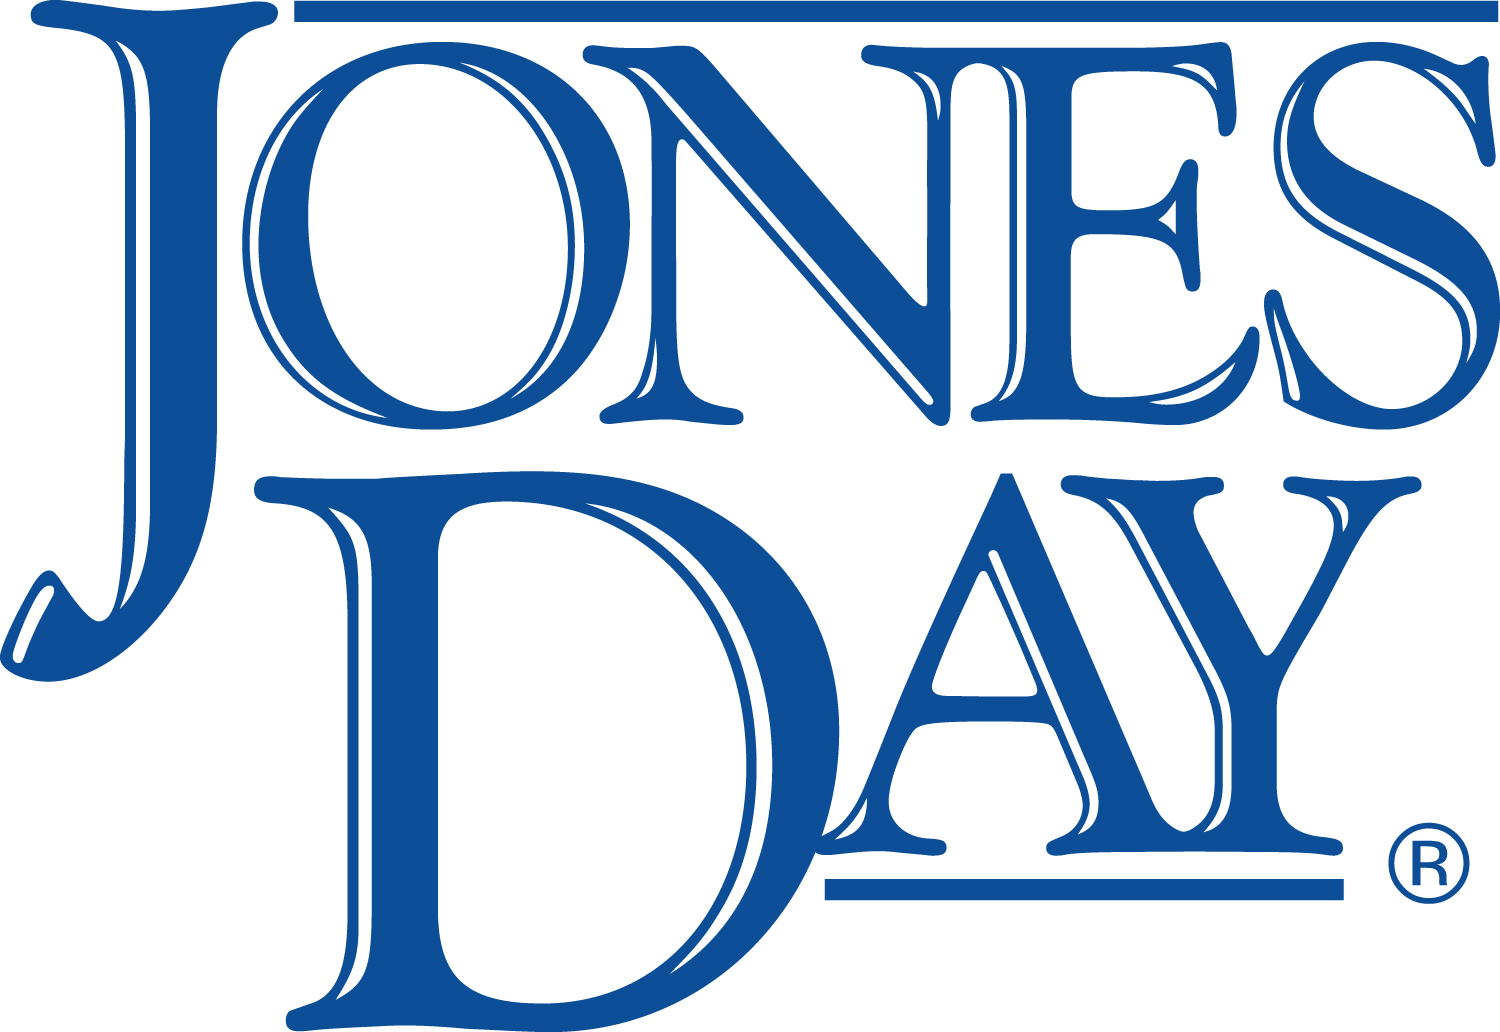 Jones Day Blue logo 2019